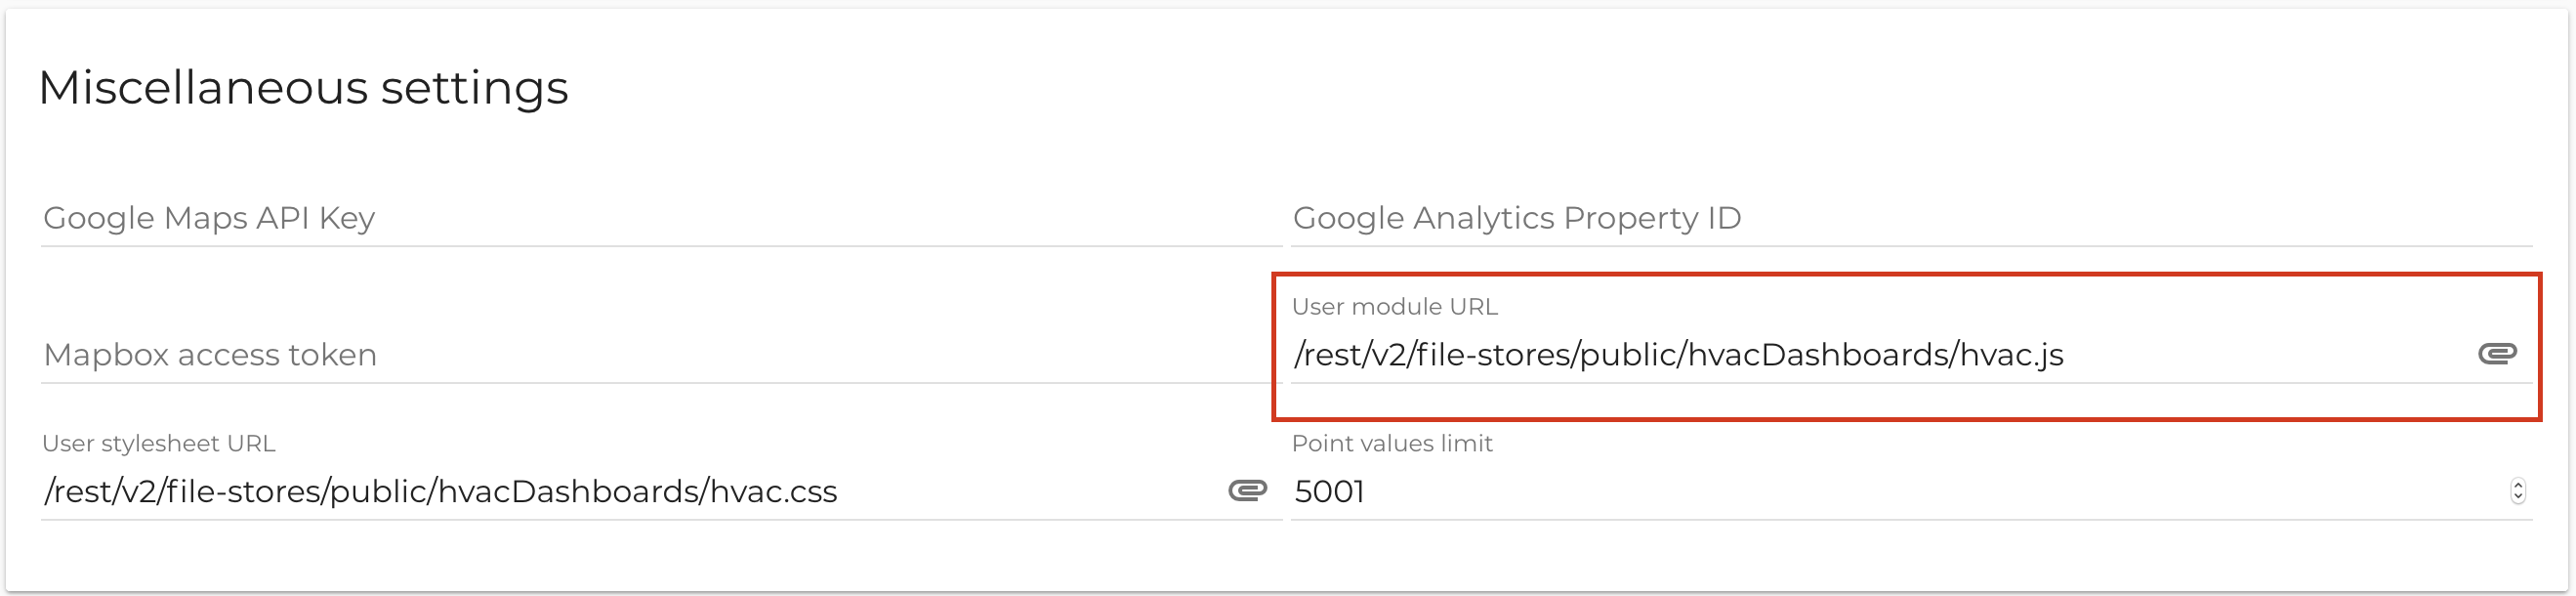 Add user module URL